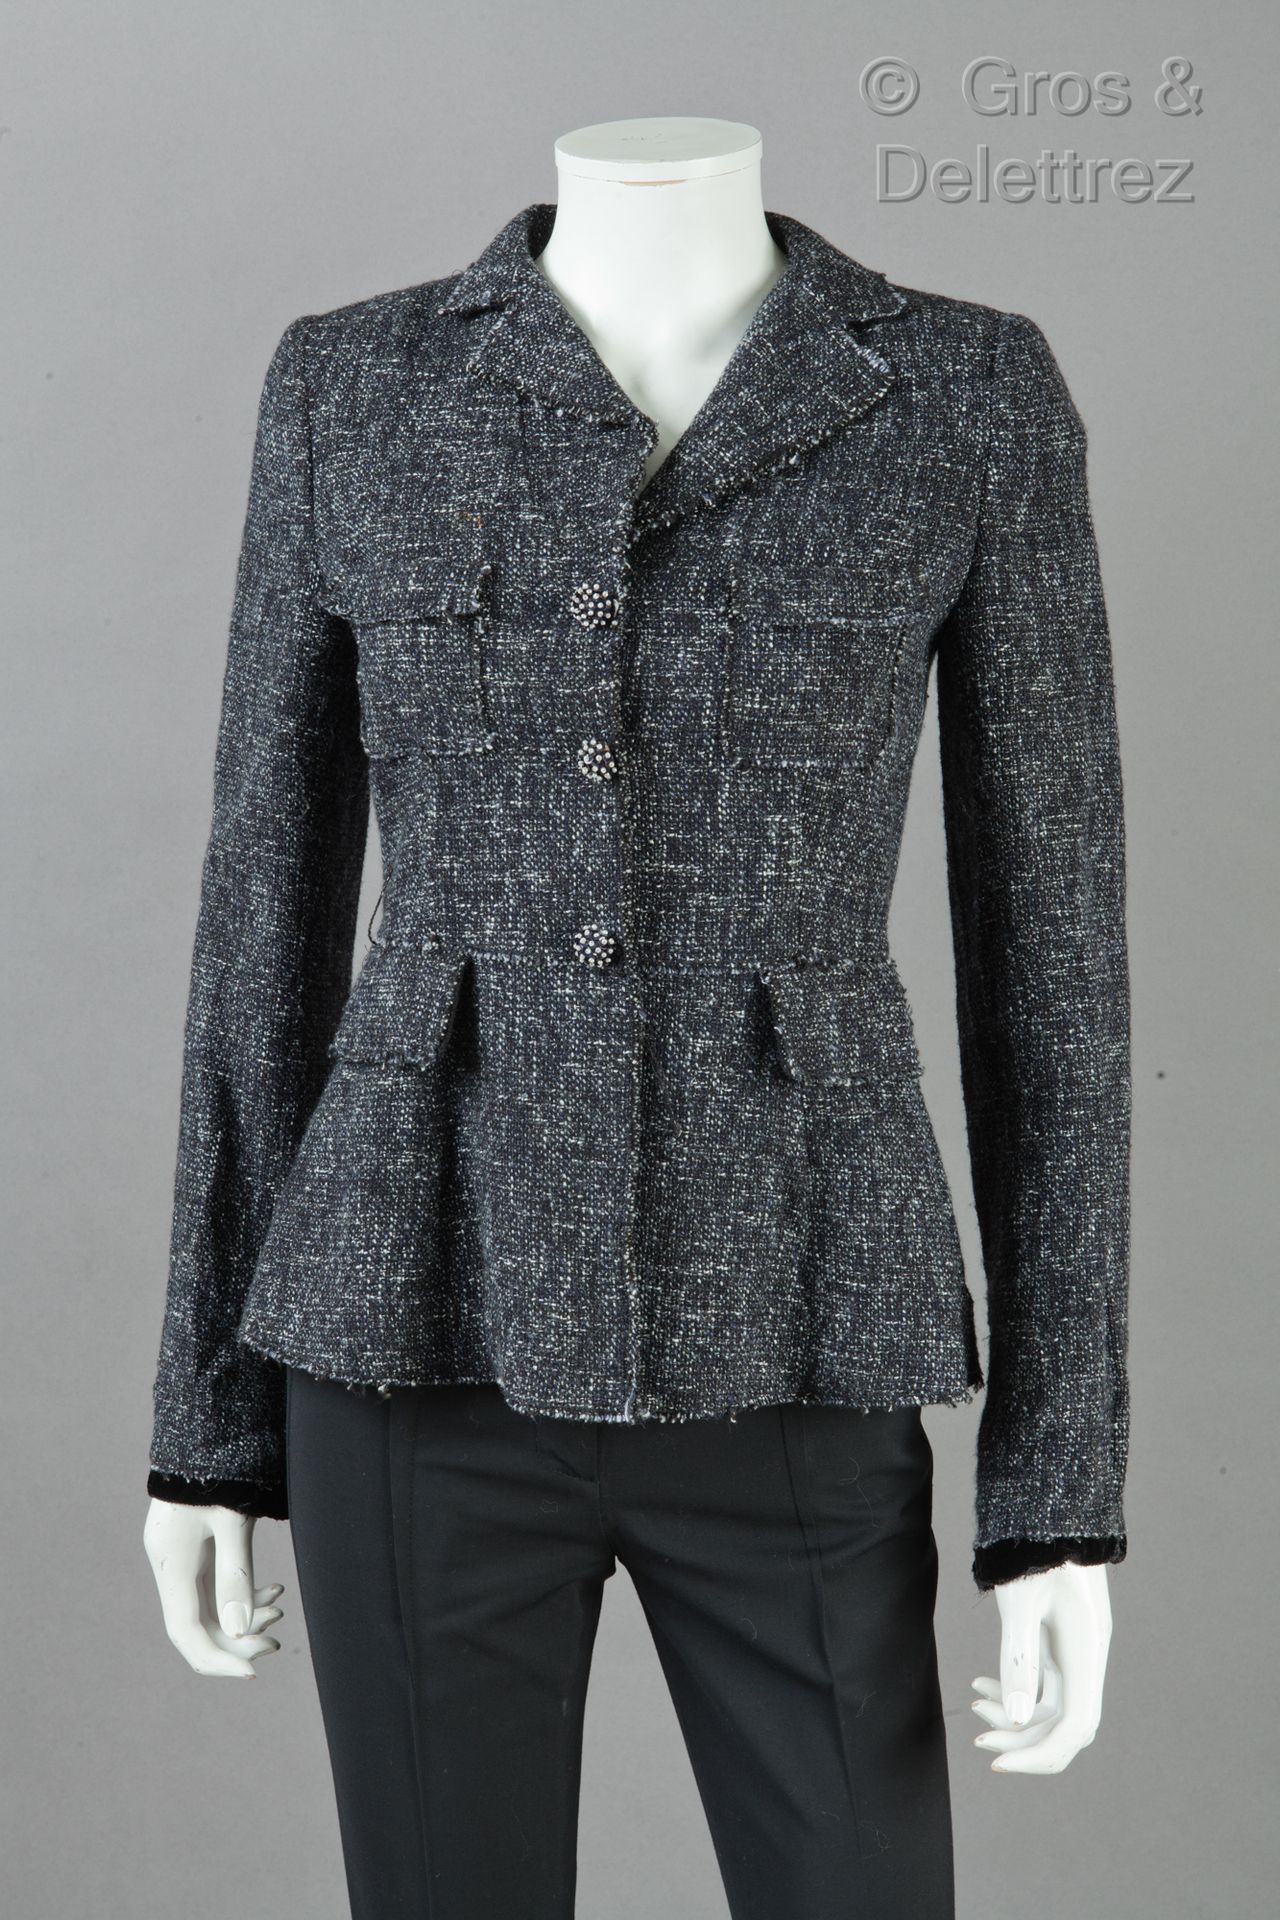 PHILOSOPHY DI ALBERTA FERRETTI Jacket in black, white, grey mottled tweed with f&hellip;